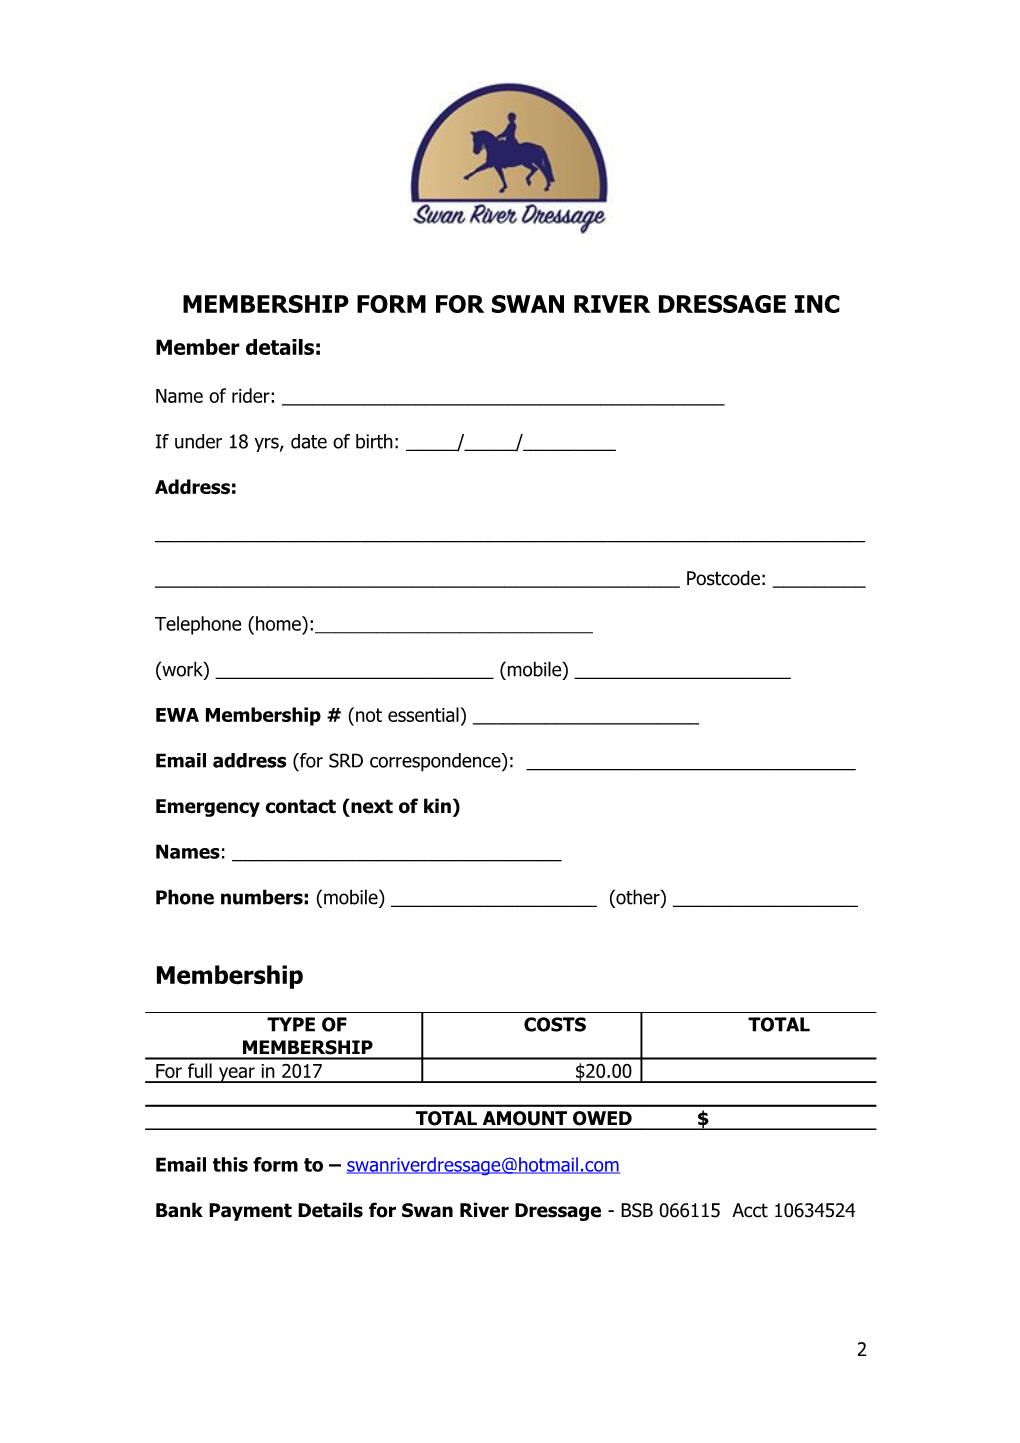 Swan River Dressage Membership Form - 2017